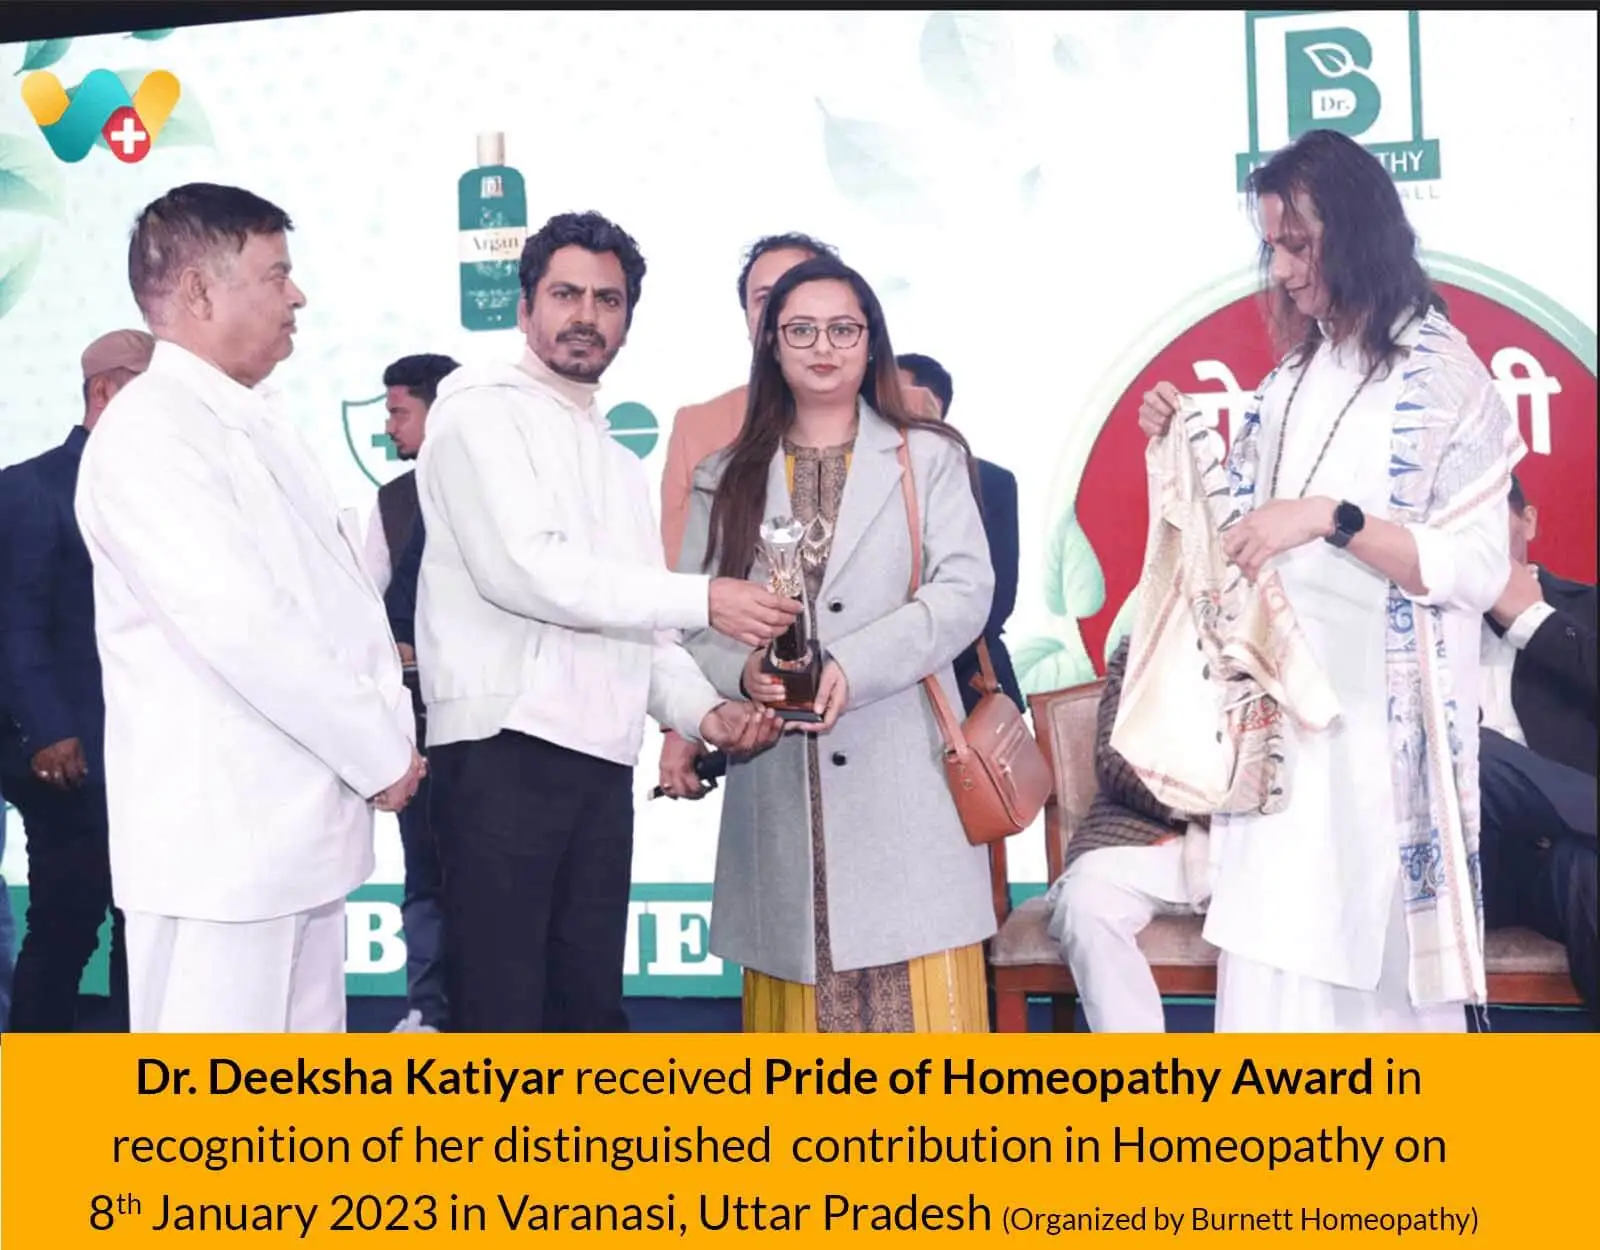 Dr. Deeksha Katiyar Receiving Award from Nawazuddin